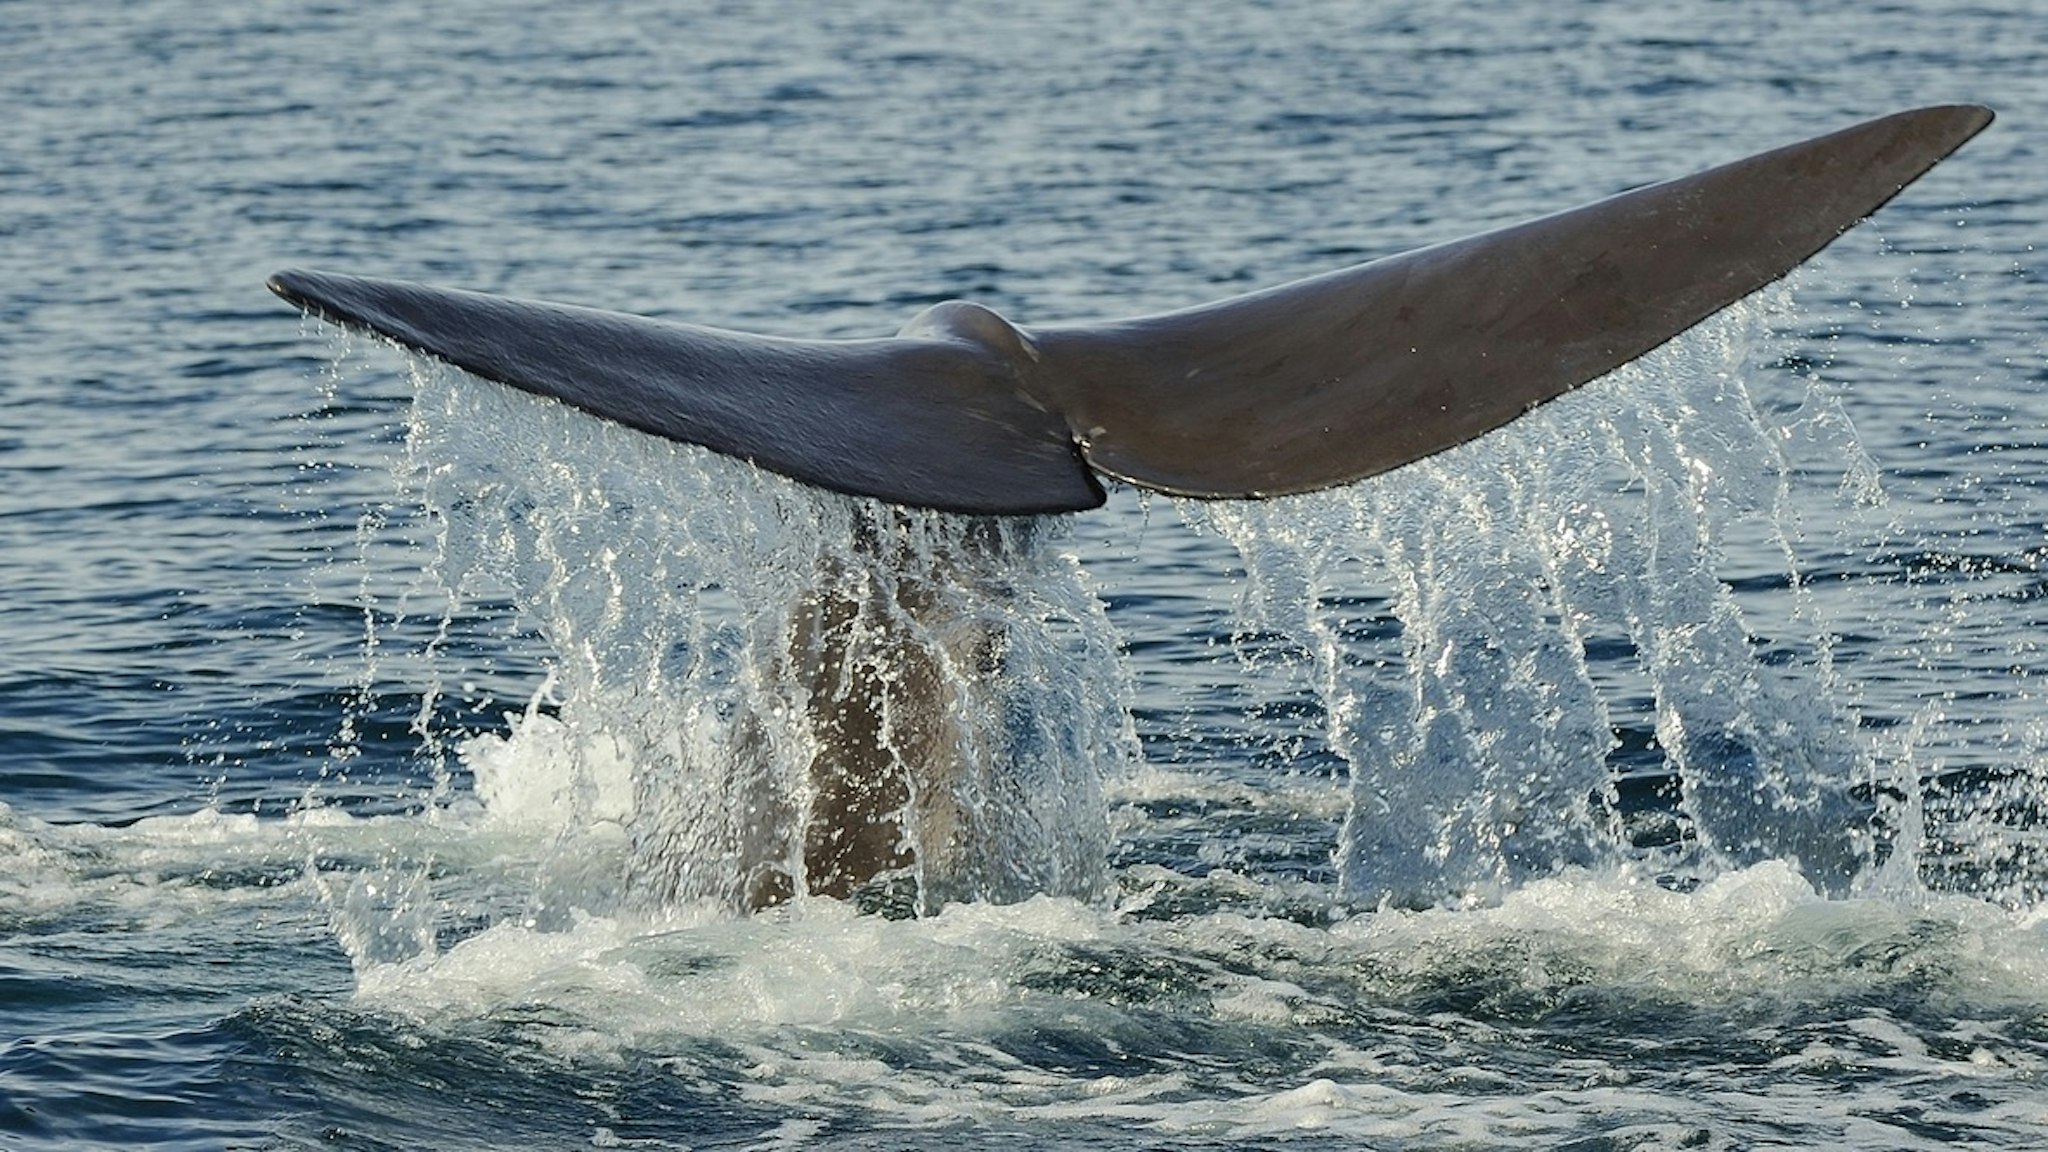 Mexico, Baja California, Diving Sperm whale - stock photo Mexico, Baja California, Diving Sperm whale Christophe Boisvieux via Getty Images